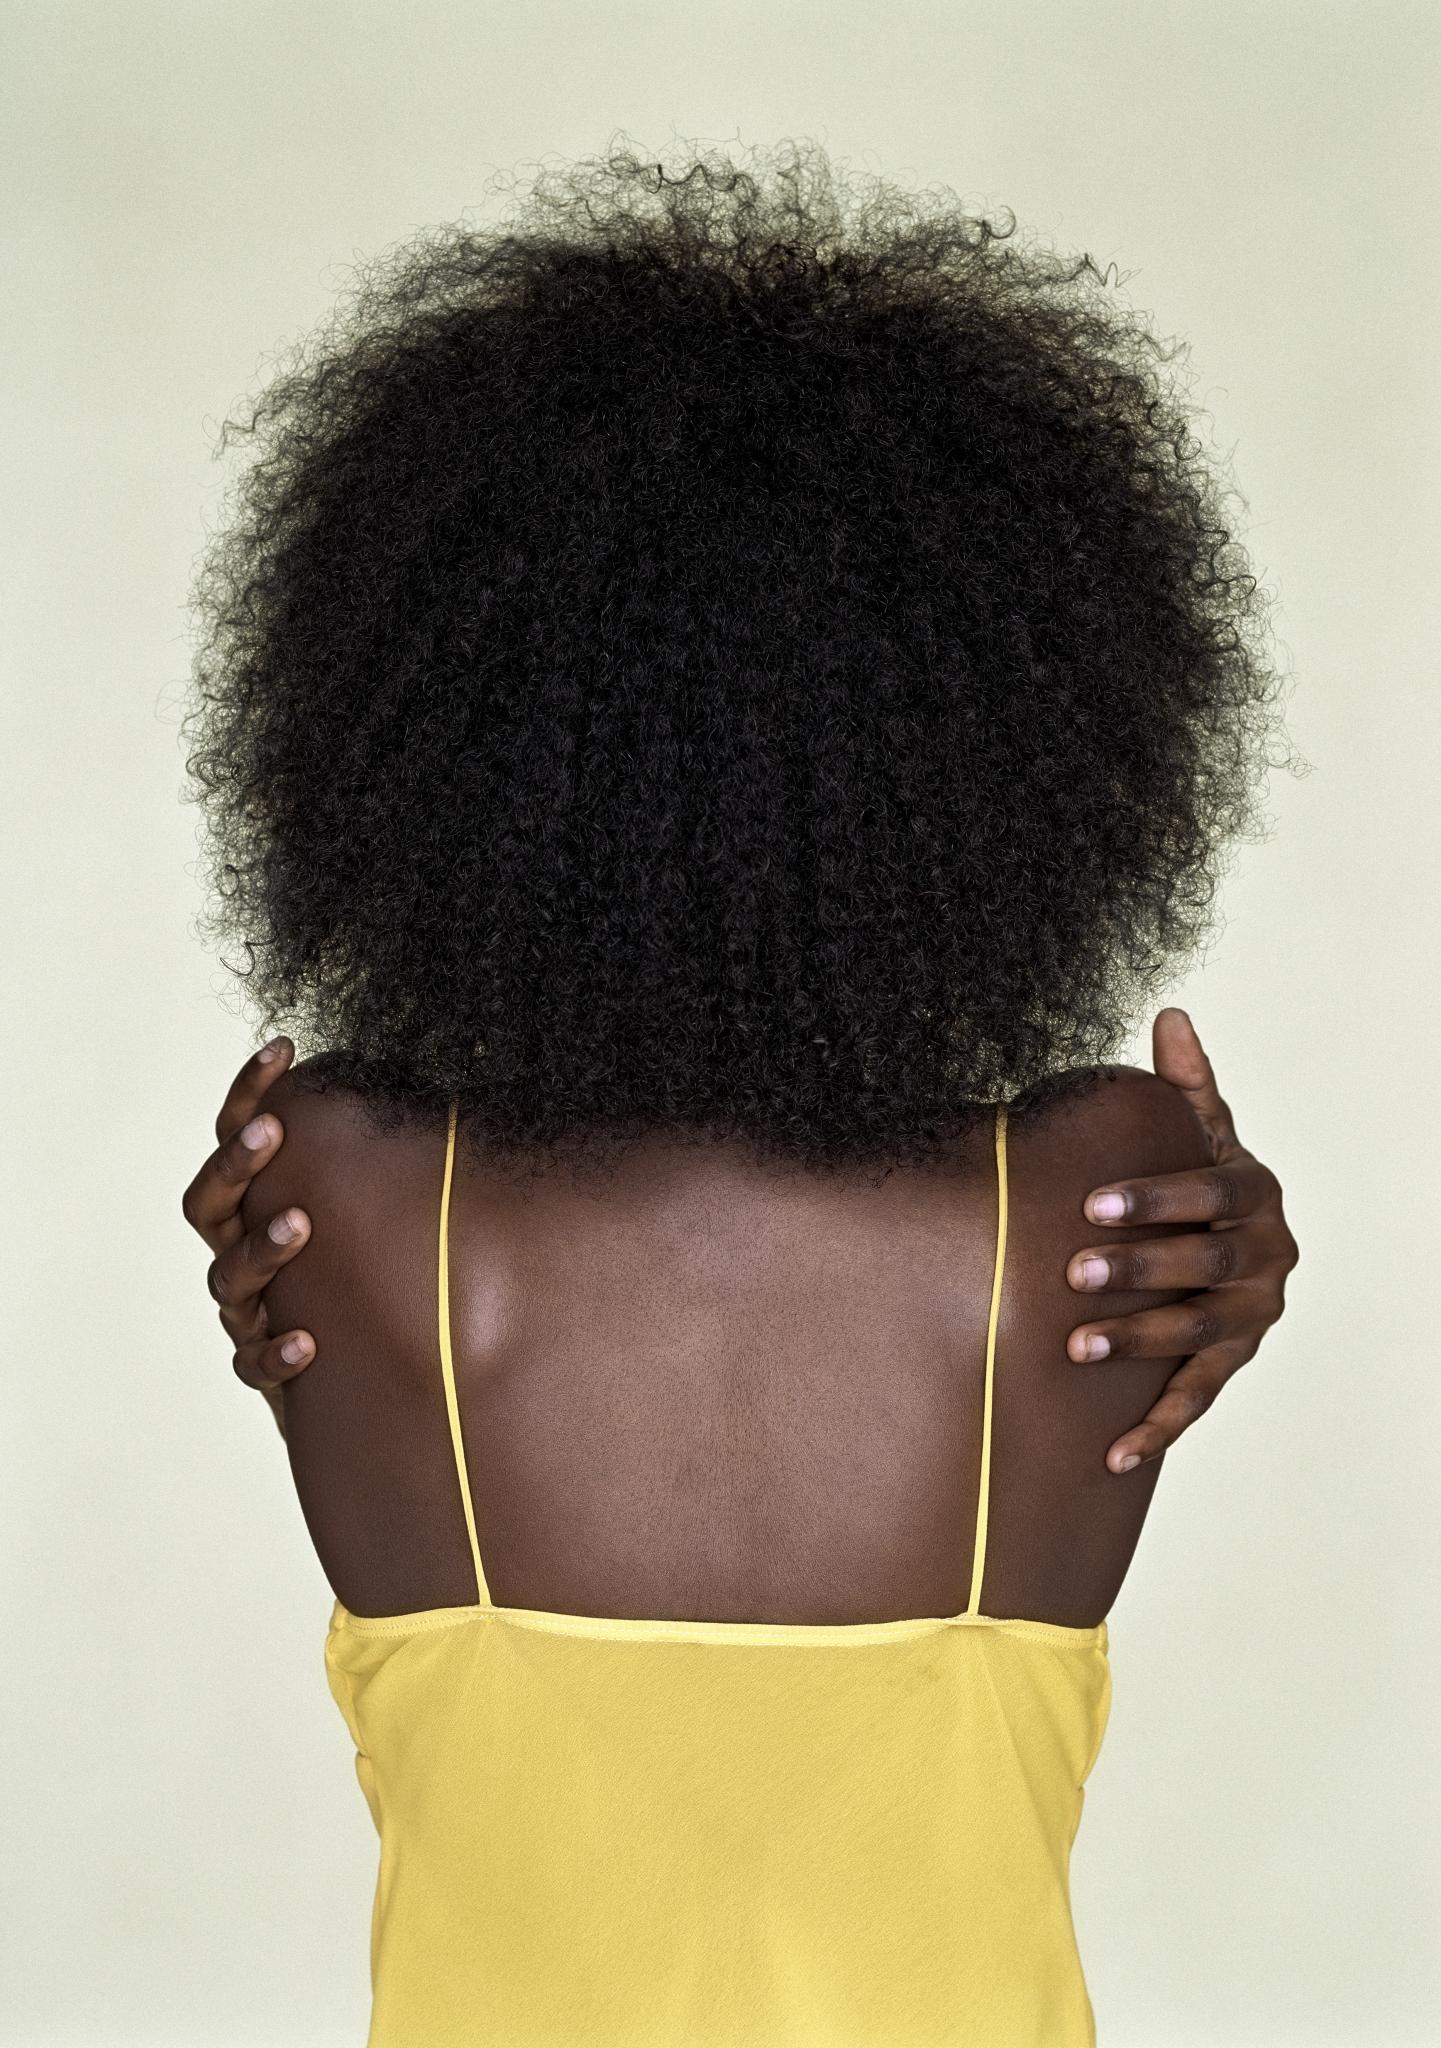 Hair On Purpose: Meet The Black Entrepreneur Teaching Young Girls How To Love Their Hair
